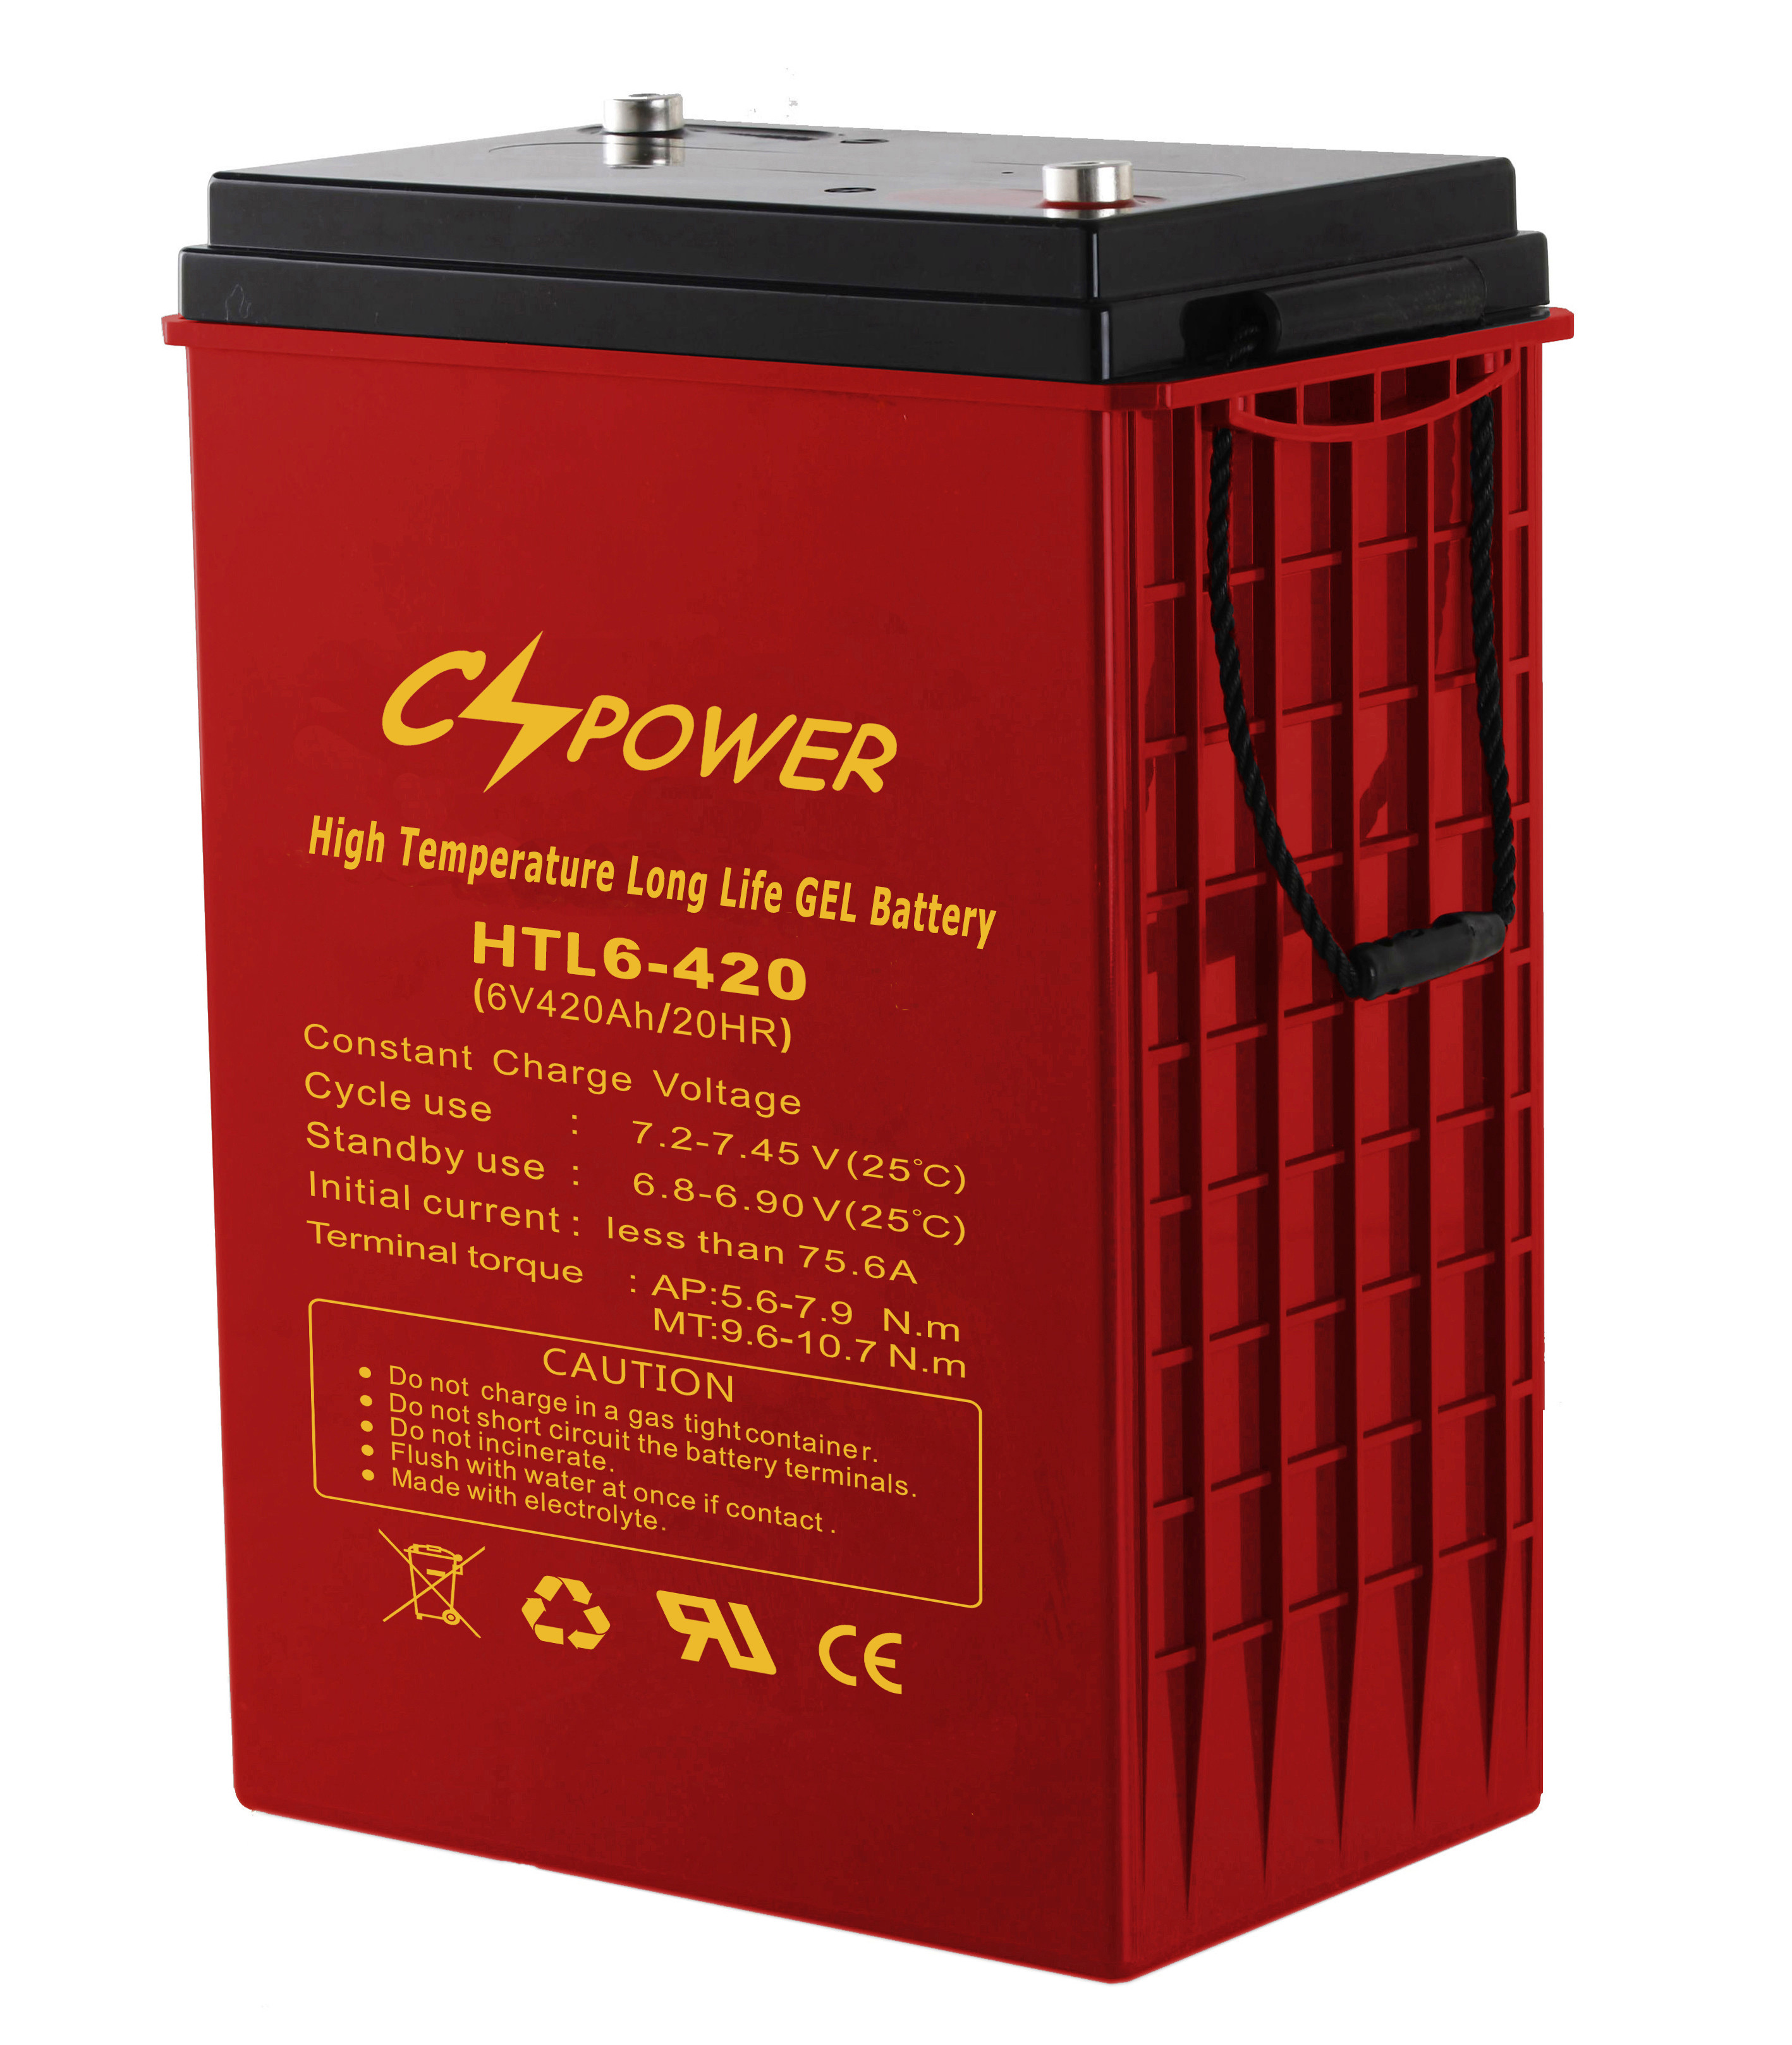 Cspower Anti High Temperature Long Life Gel Battery 6V 420ah